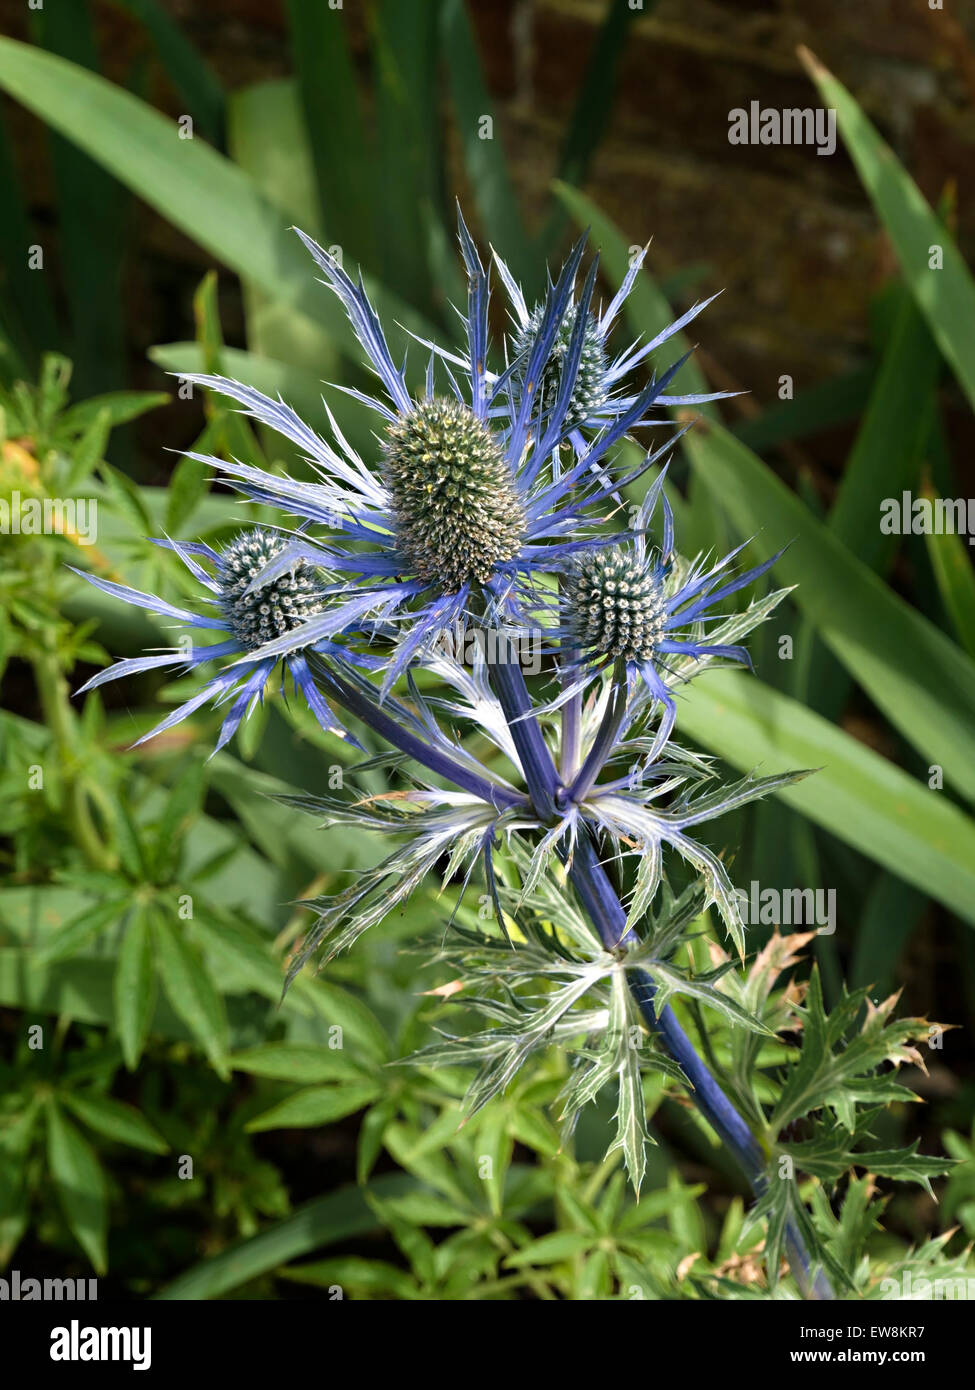 Sunlit Eryngium Blue Sea Holly Flowers, closeup, UK. Stock Photo